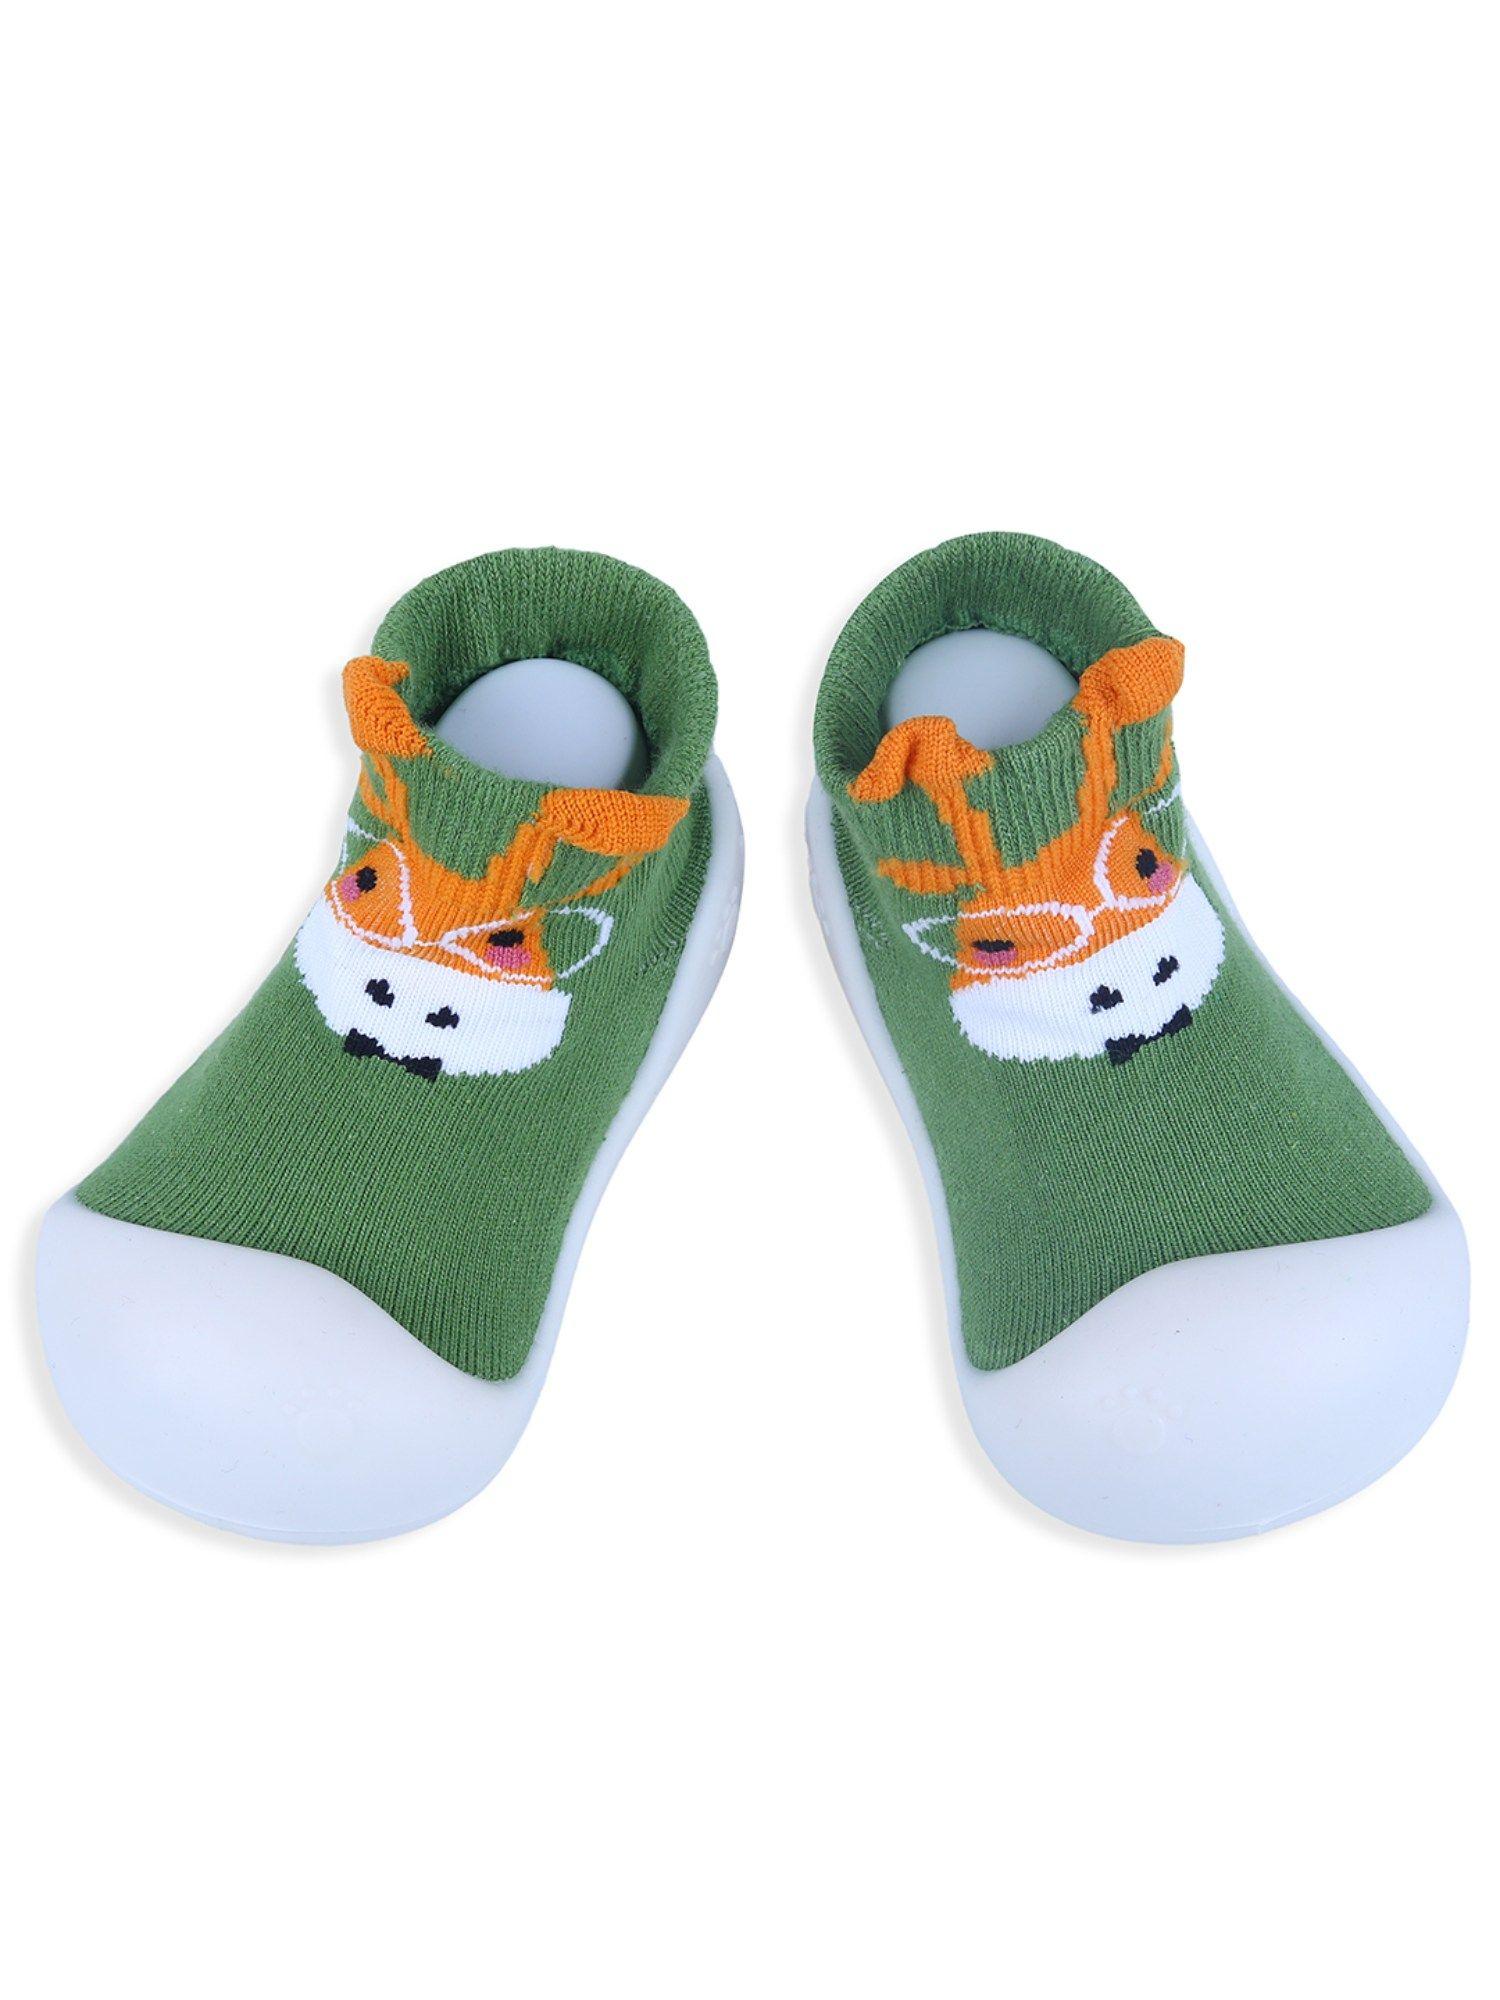 cartoon animal rubber comfortable sole slip-on sock shoes - green